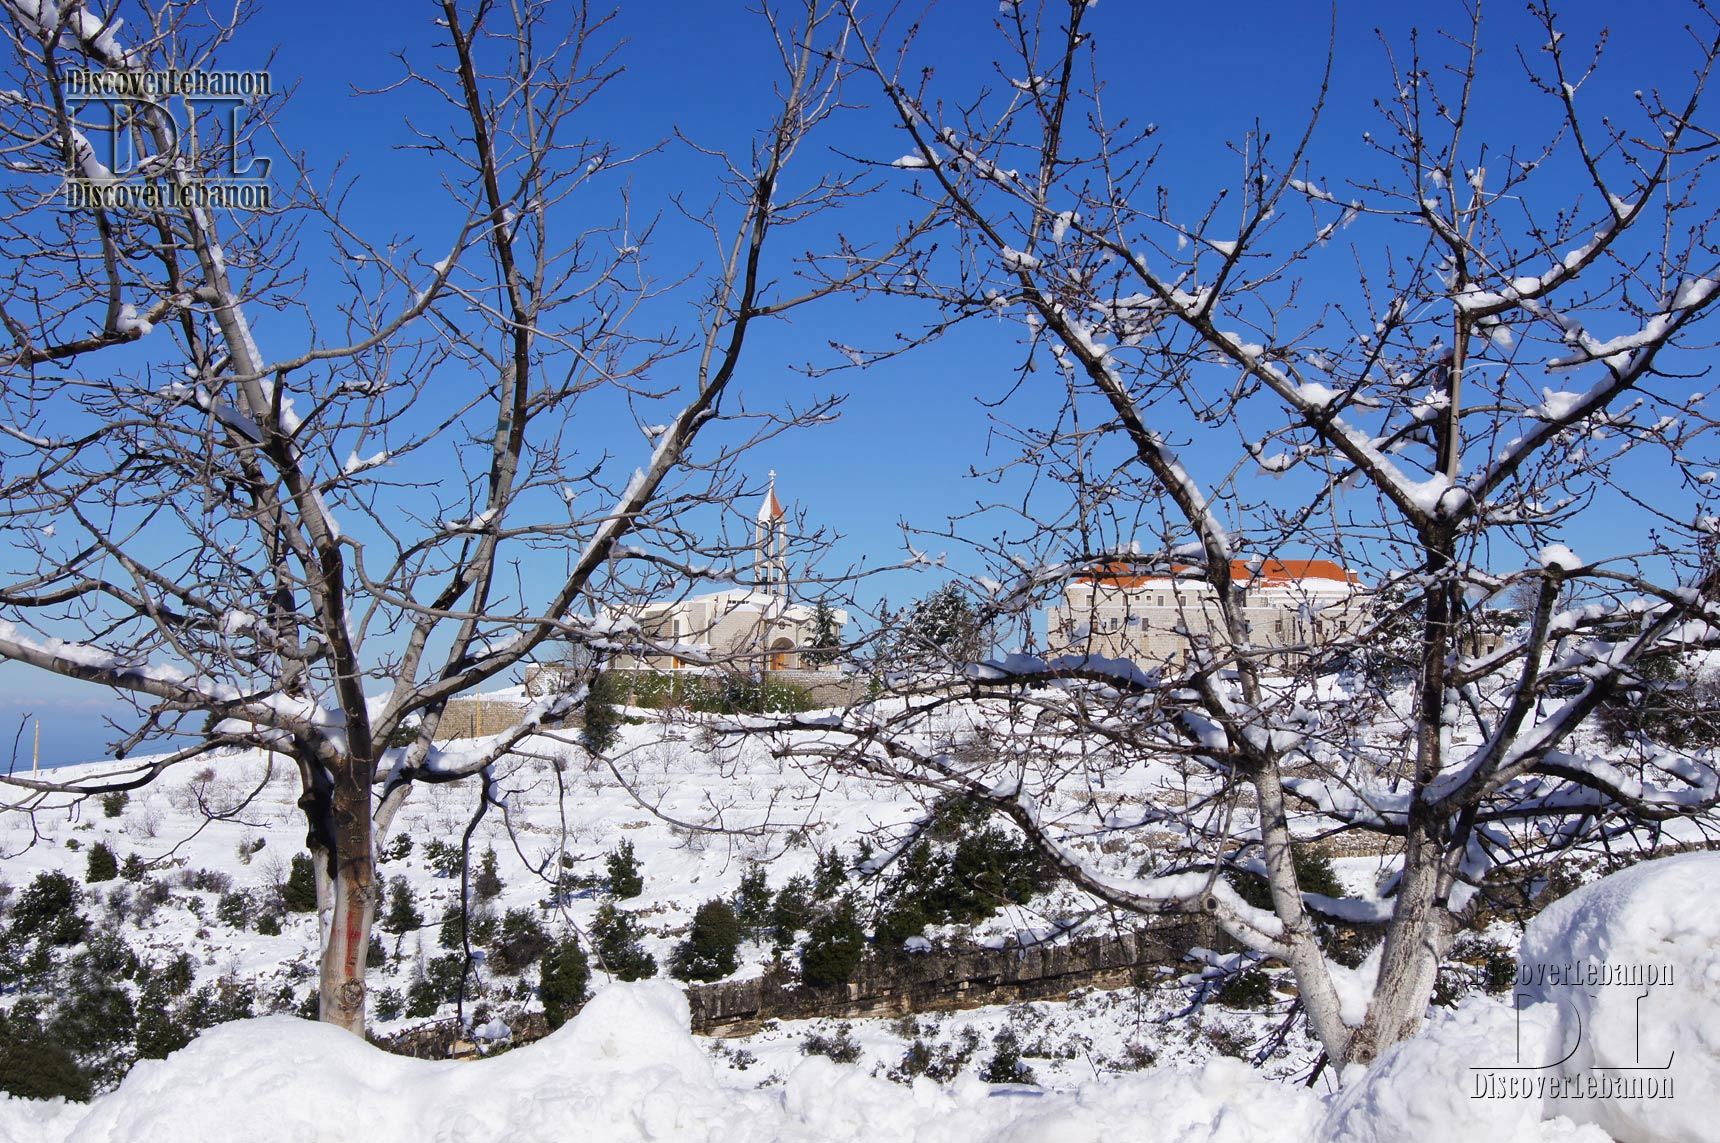 Annaya monatery and Basilica under snow